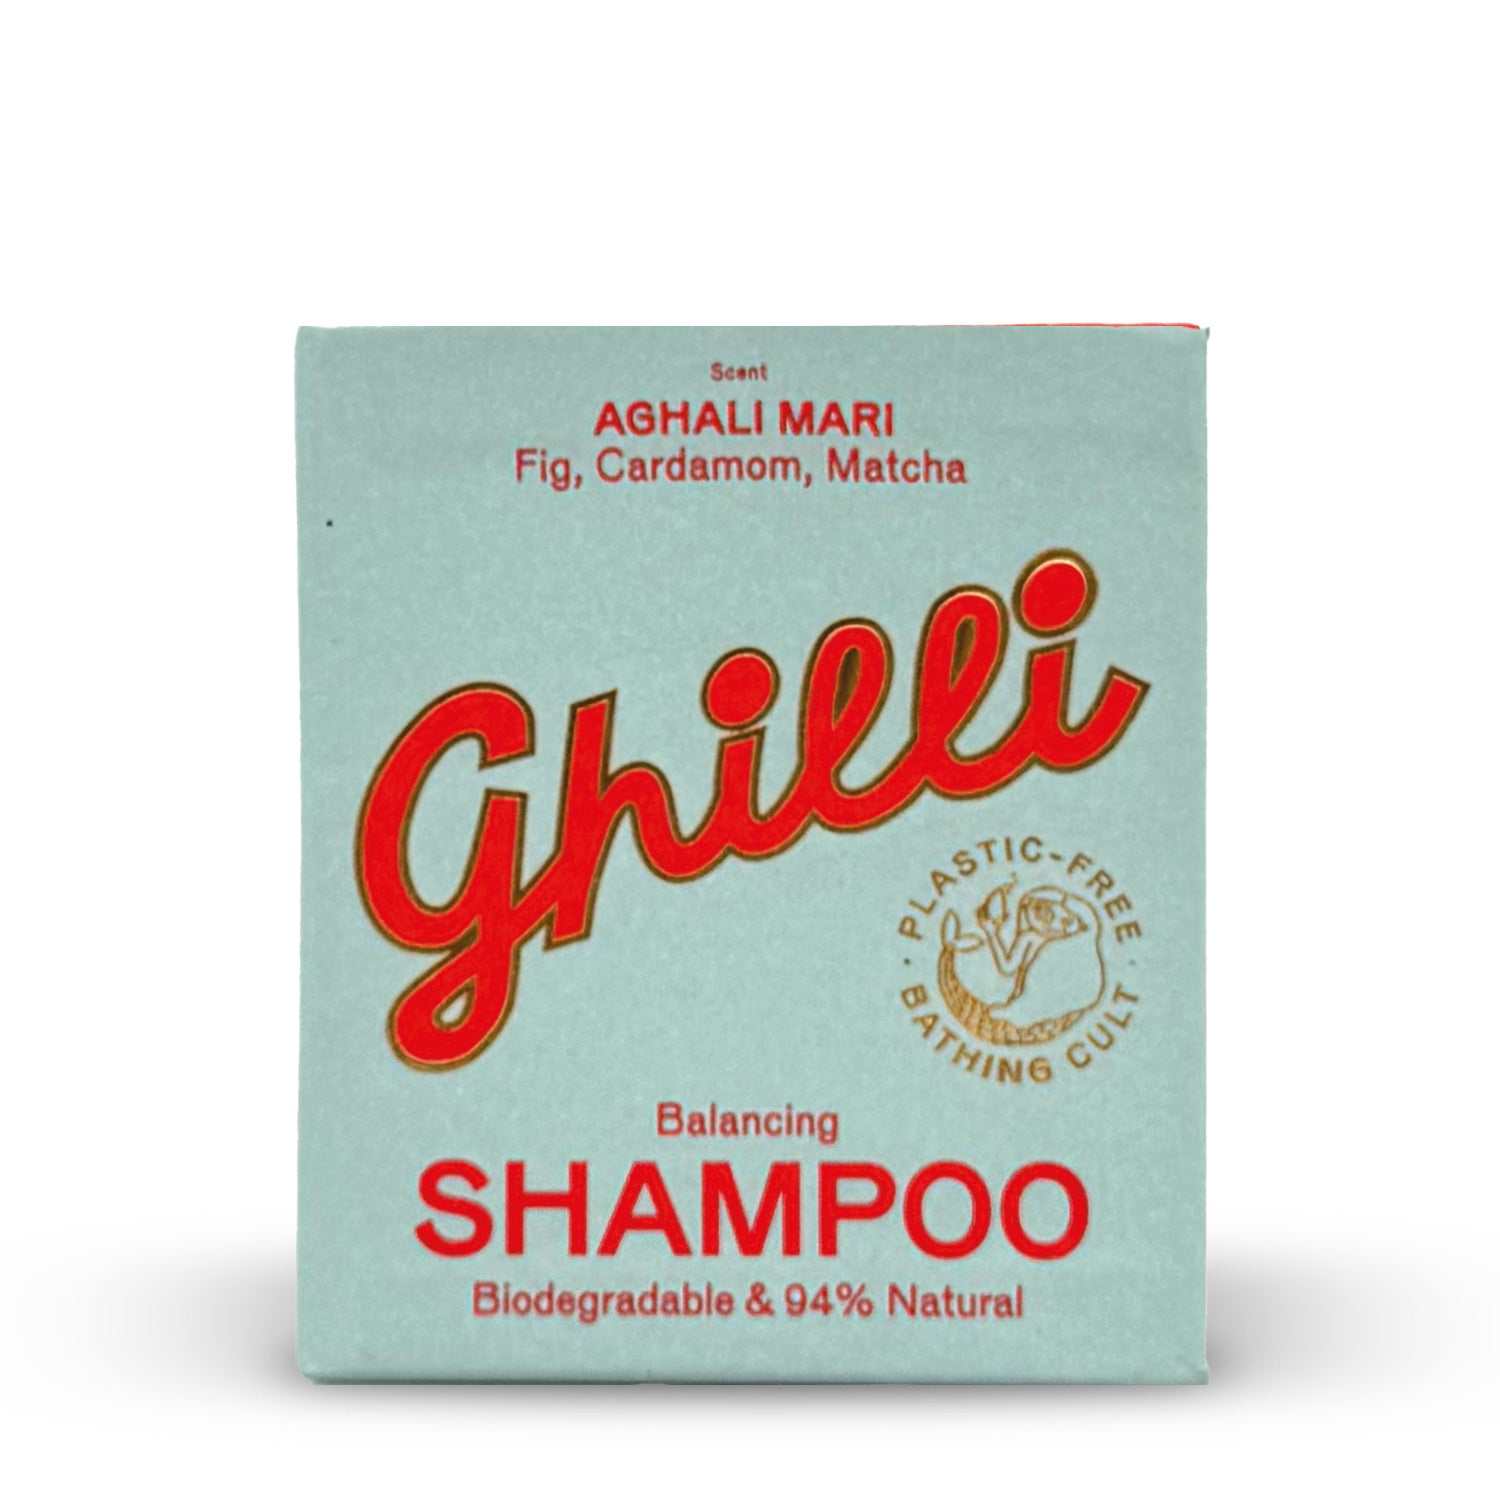 Shampoo Bar Aghali Mari - Ghilli